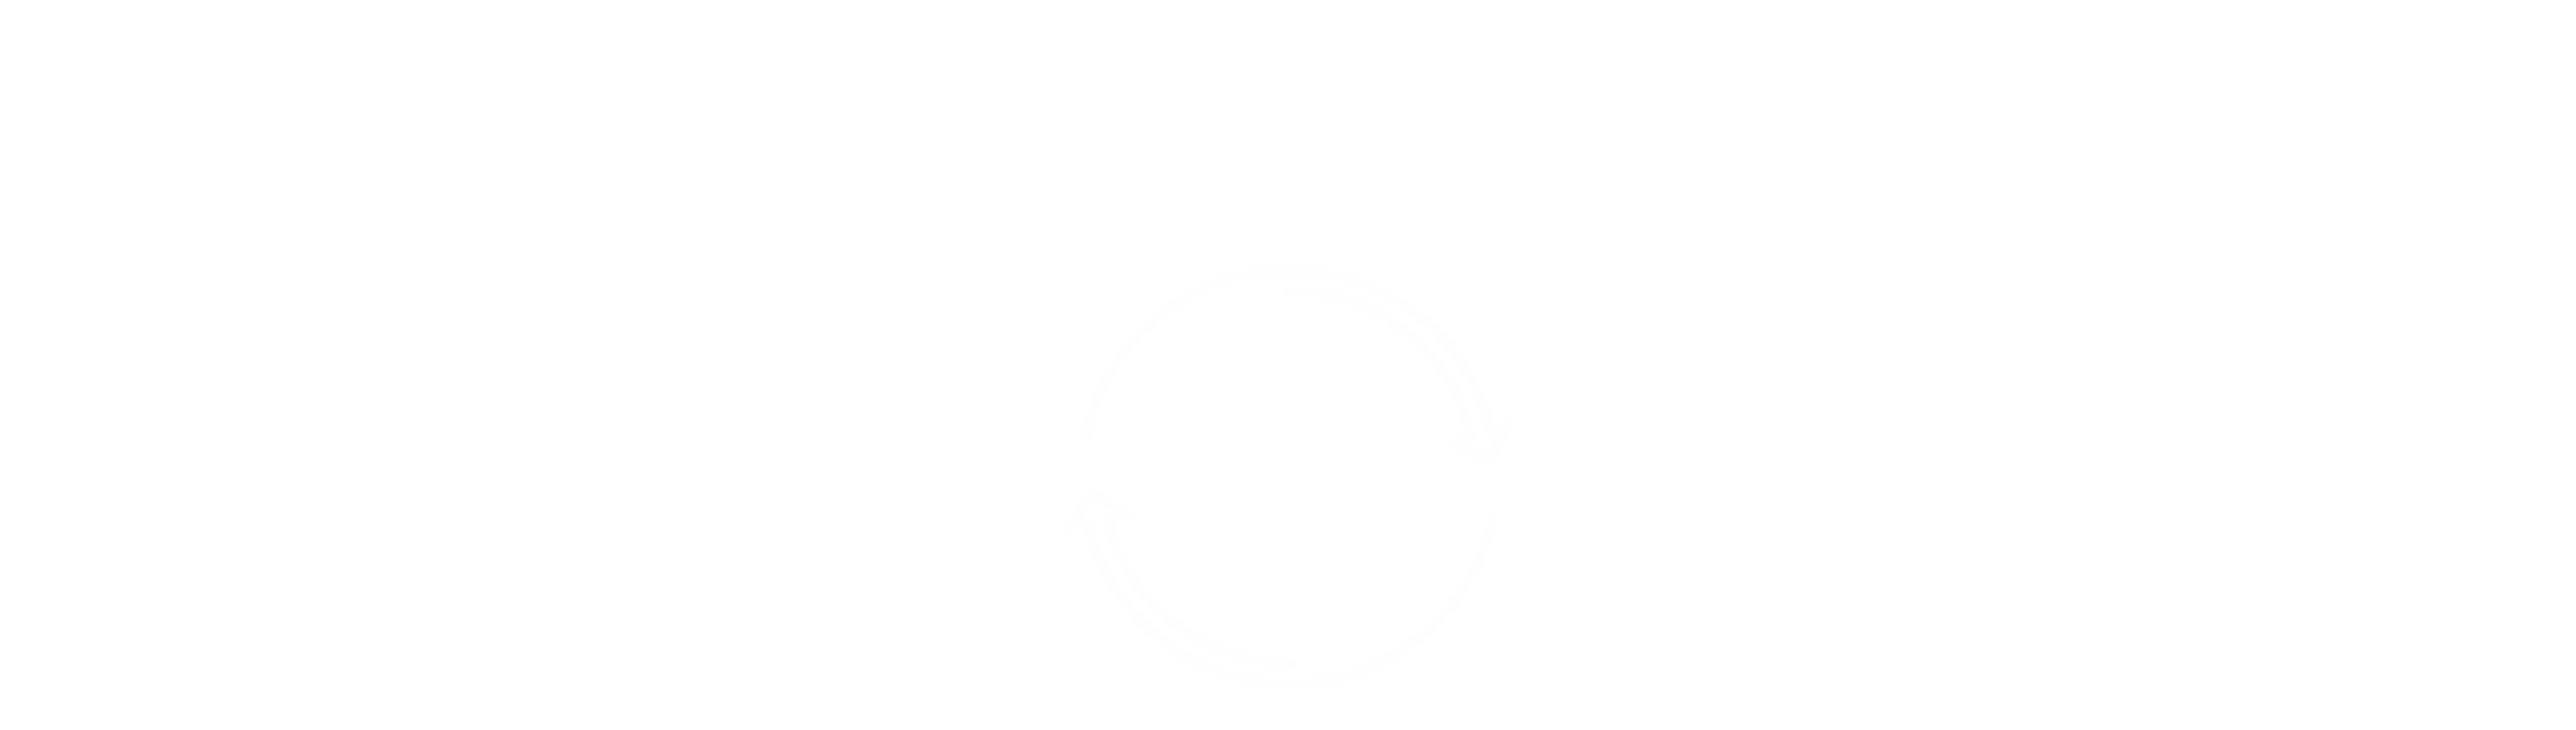 Dispute Settlement Table | United States Trade Representative